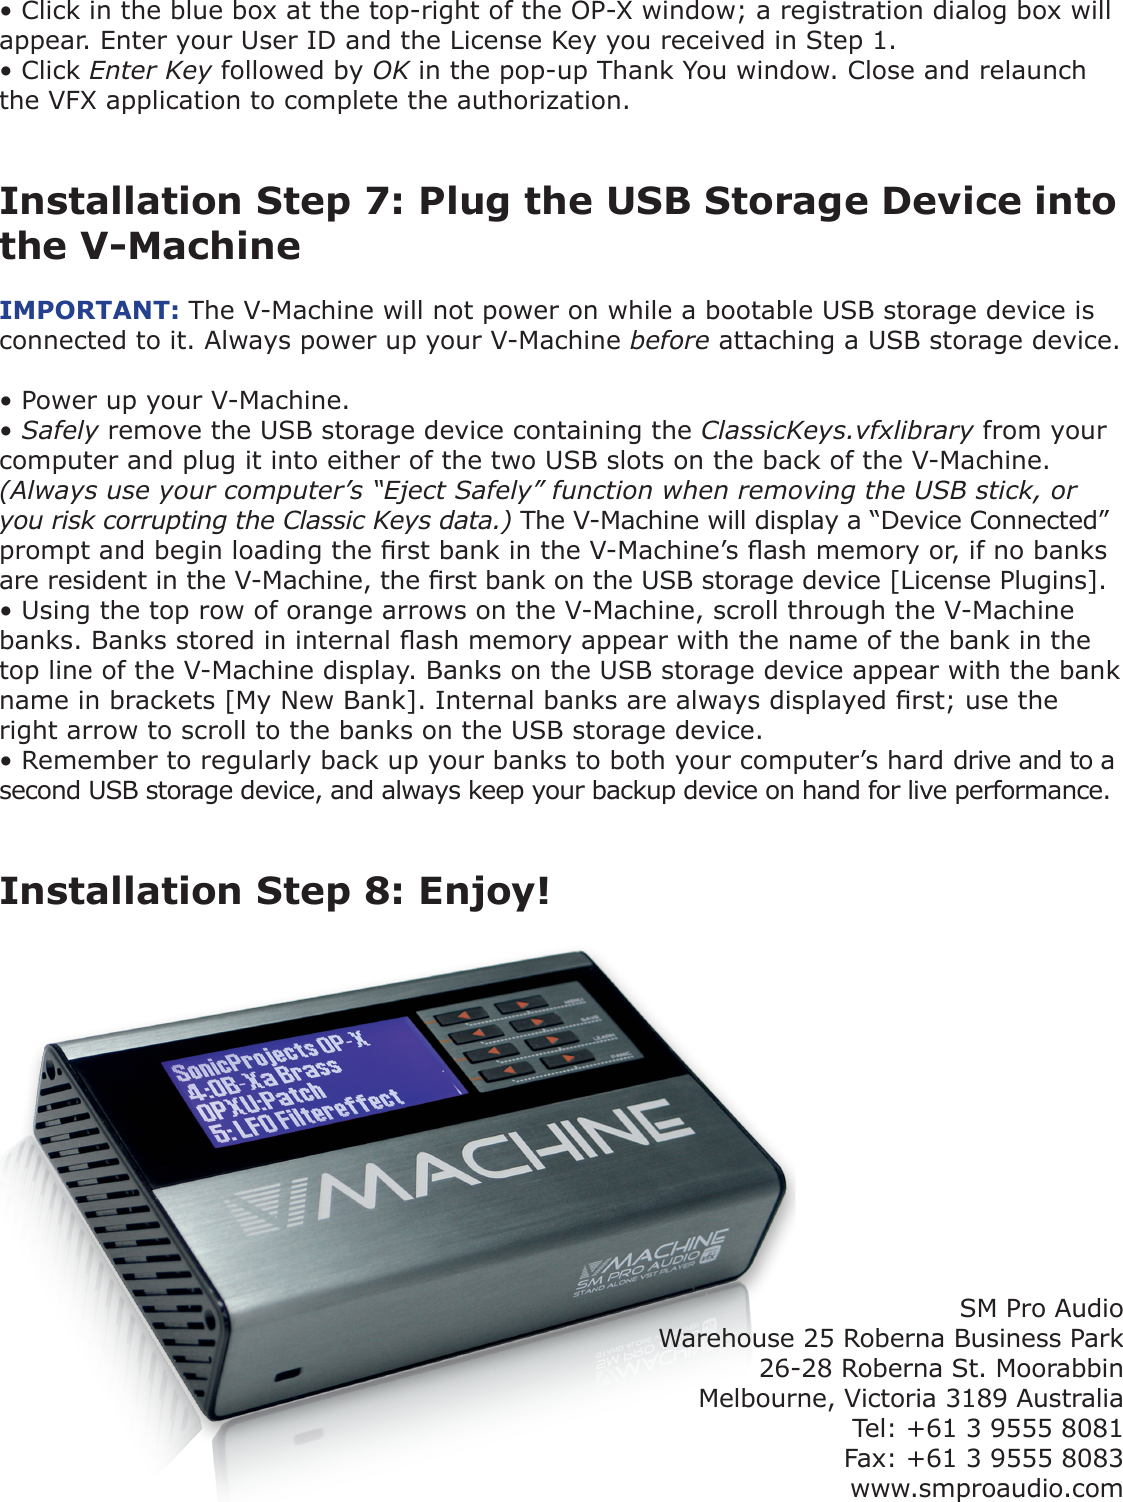 Page 8 of 8 - SM Pro Audio V-Machine Classic Keys Setup Guide